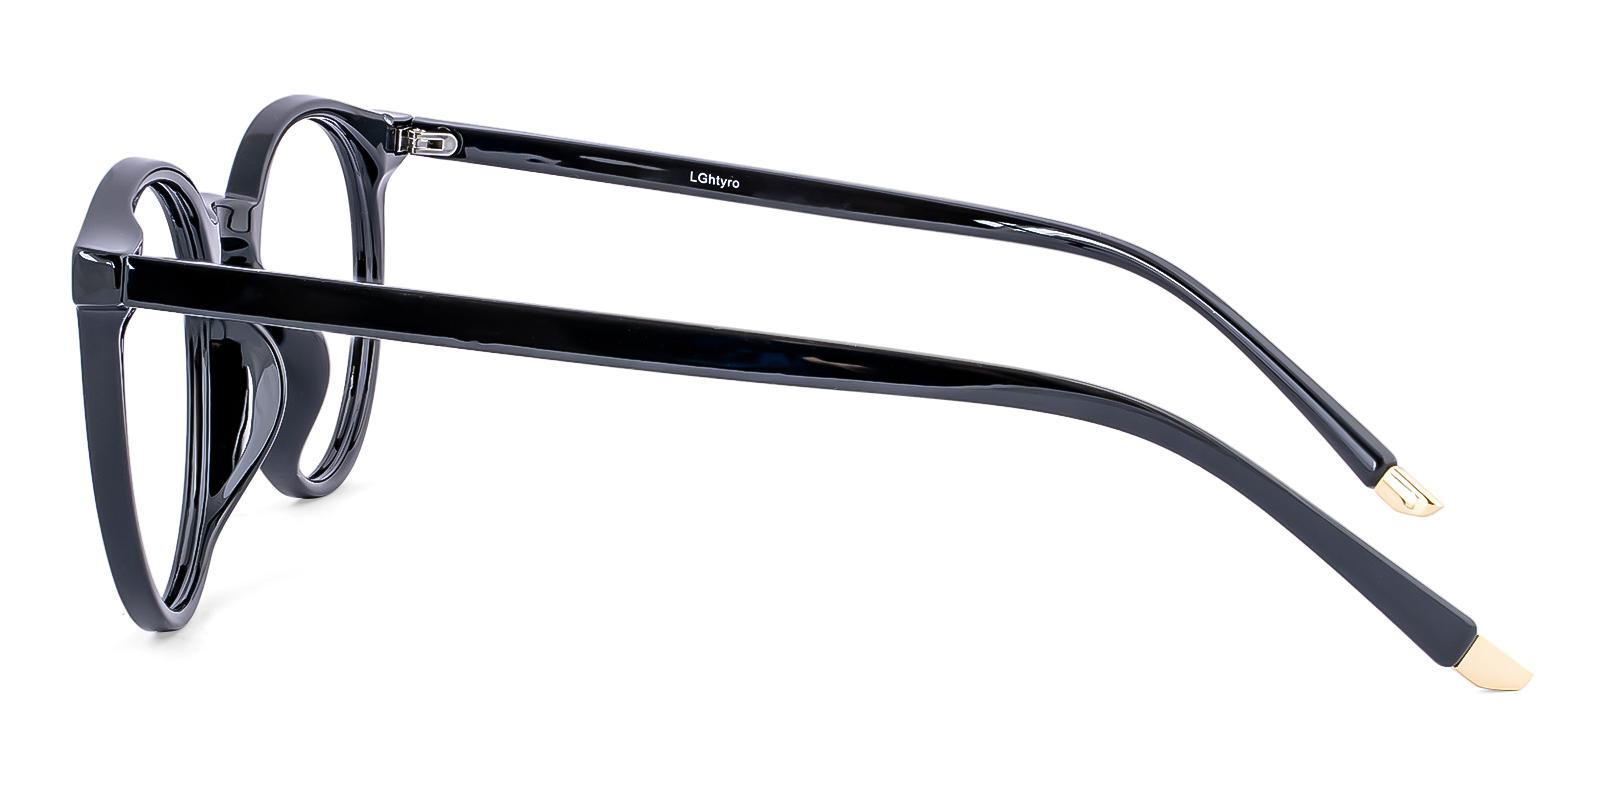 Economicition Black Plastic Eyeglasses , UniversalBridgeFit Frames from ABBE Glasses